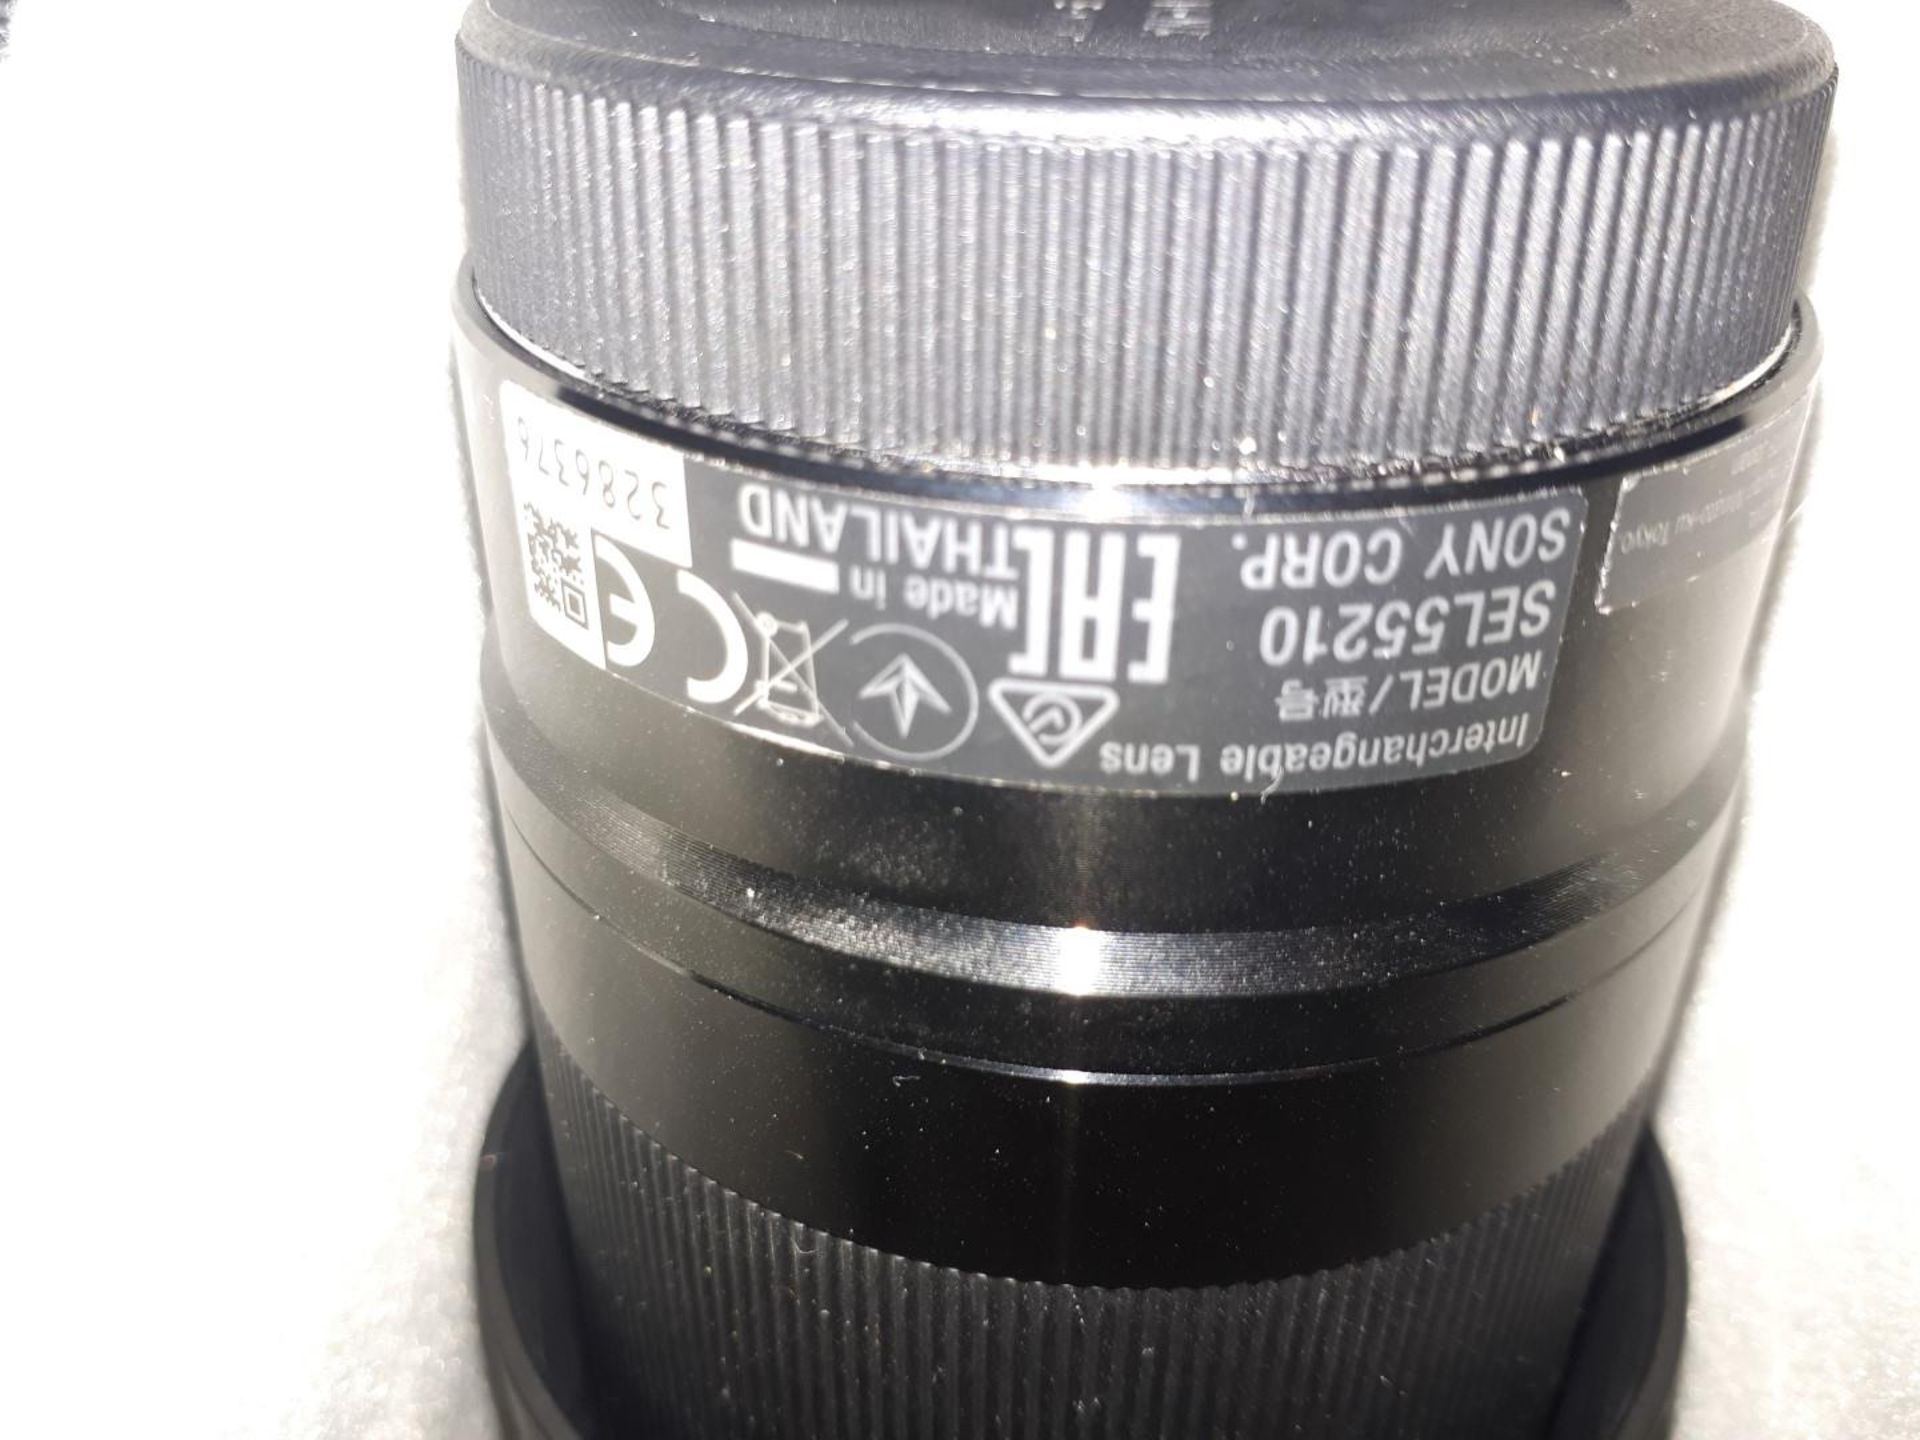 Sony Alpha A6300 4K Mirrorless Digital Camera - Image 6 of 15